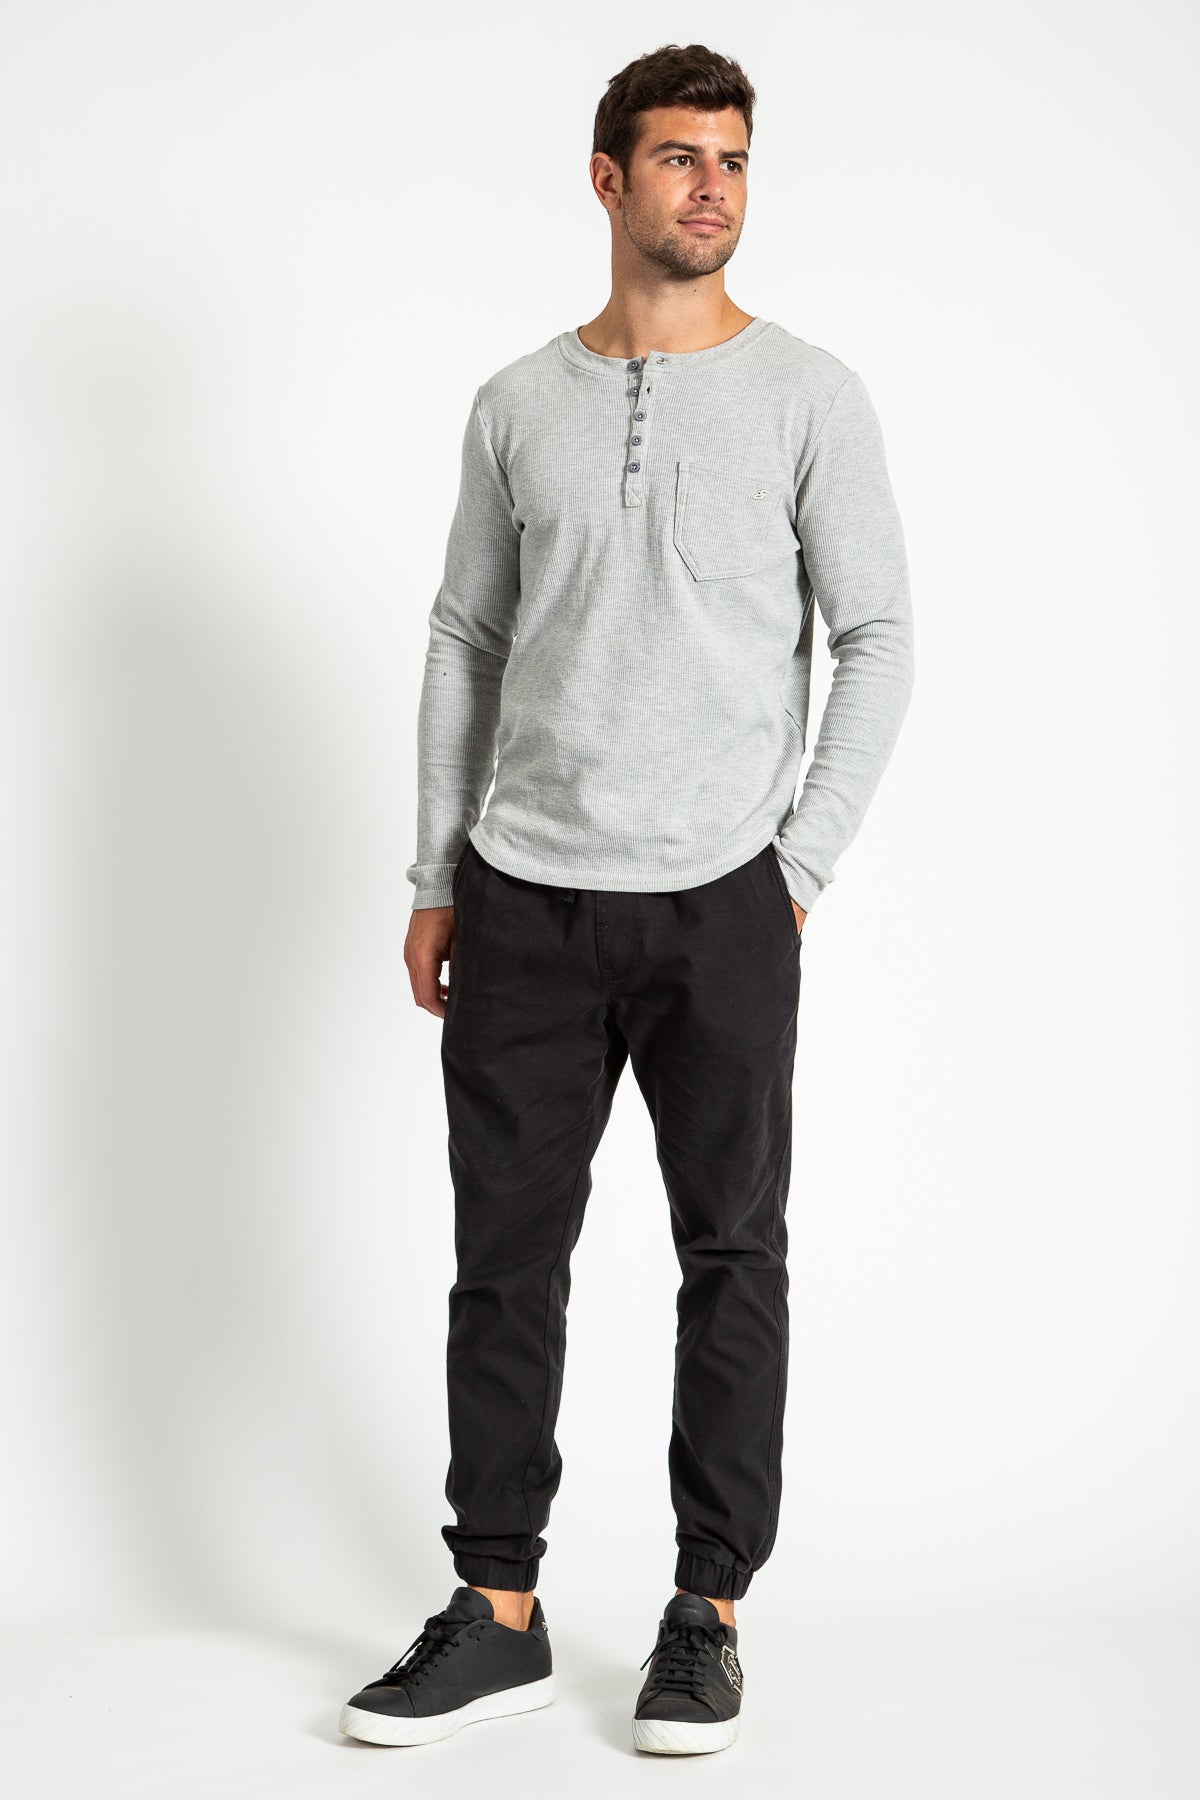 Mens Jogger Tracksuit 2 Piece Pants Sweatsuit Sweatshirt Set | eBay